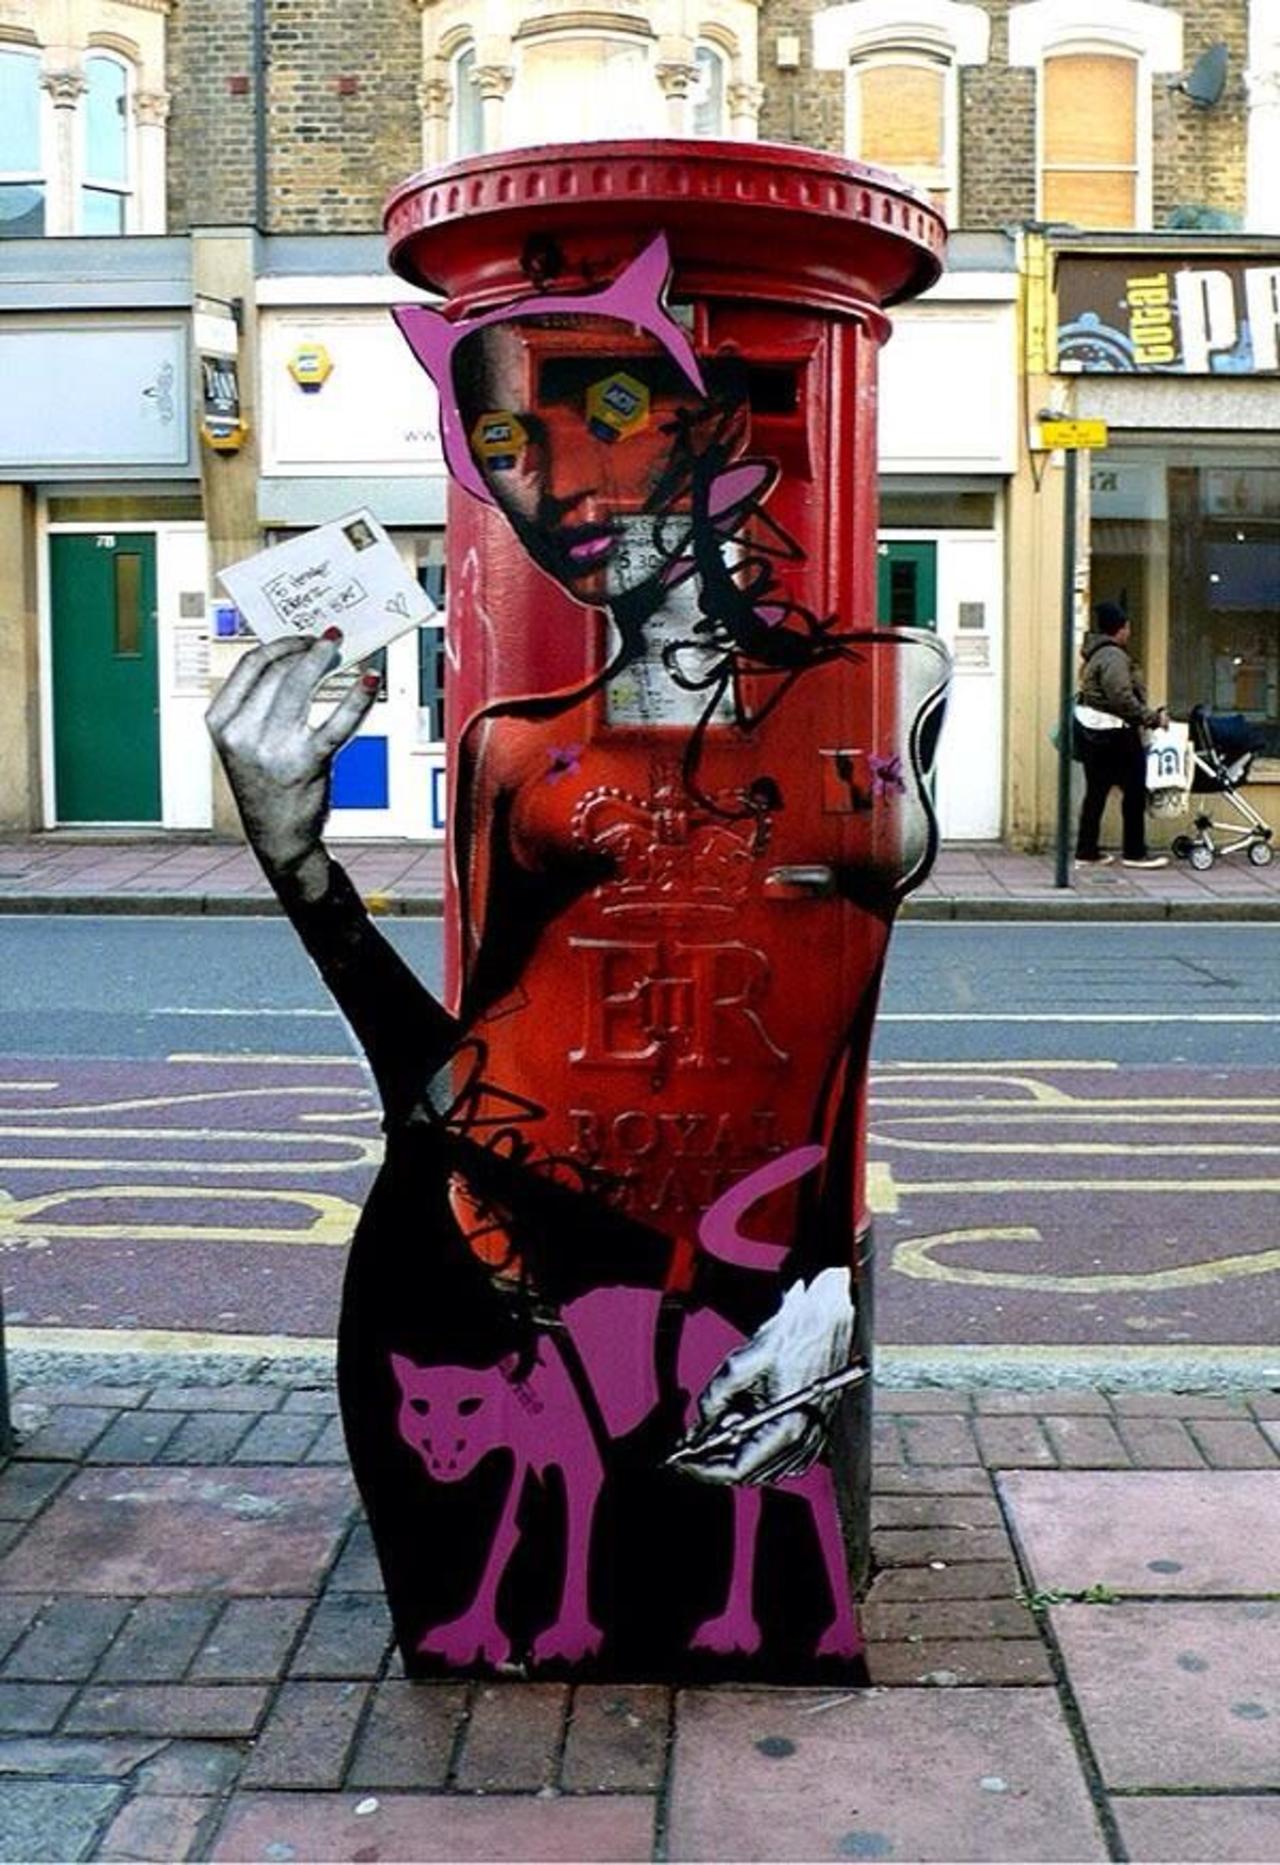 RT @GoogleStreetArt: Artist Miss Bugs very clever Street Art piece in London, UK

#art #graffiti #streetart http://t.co/OV2jxlgIWa